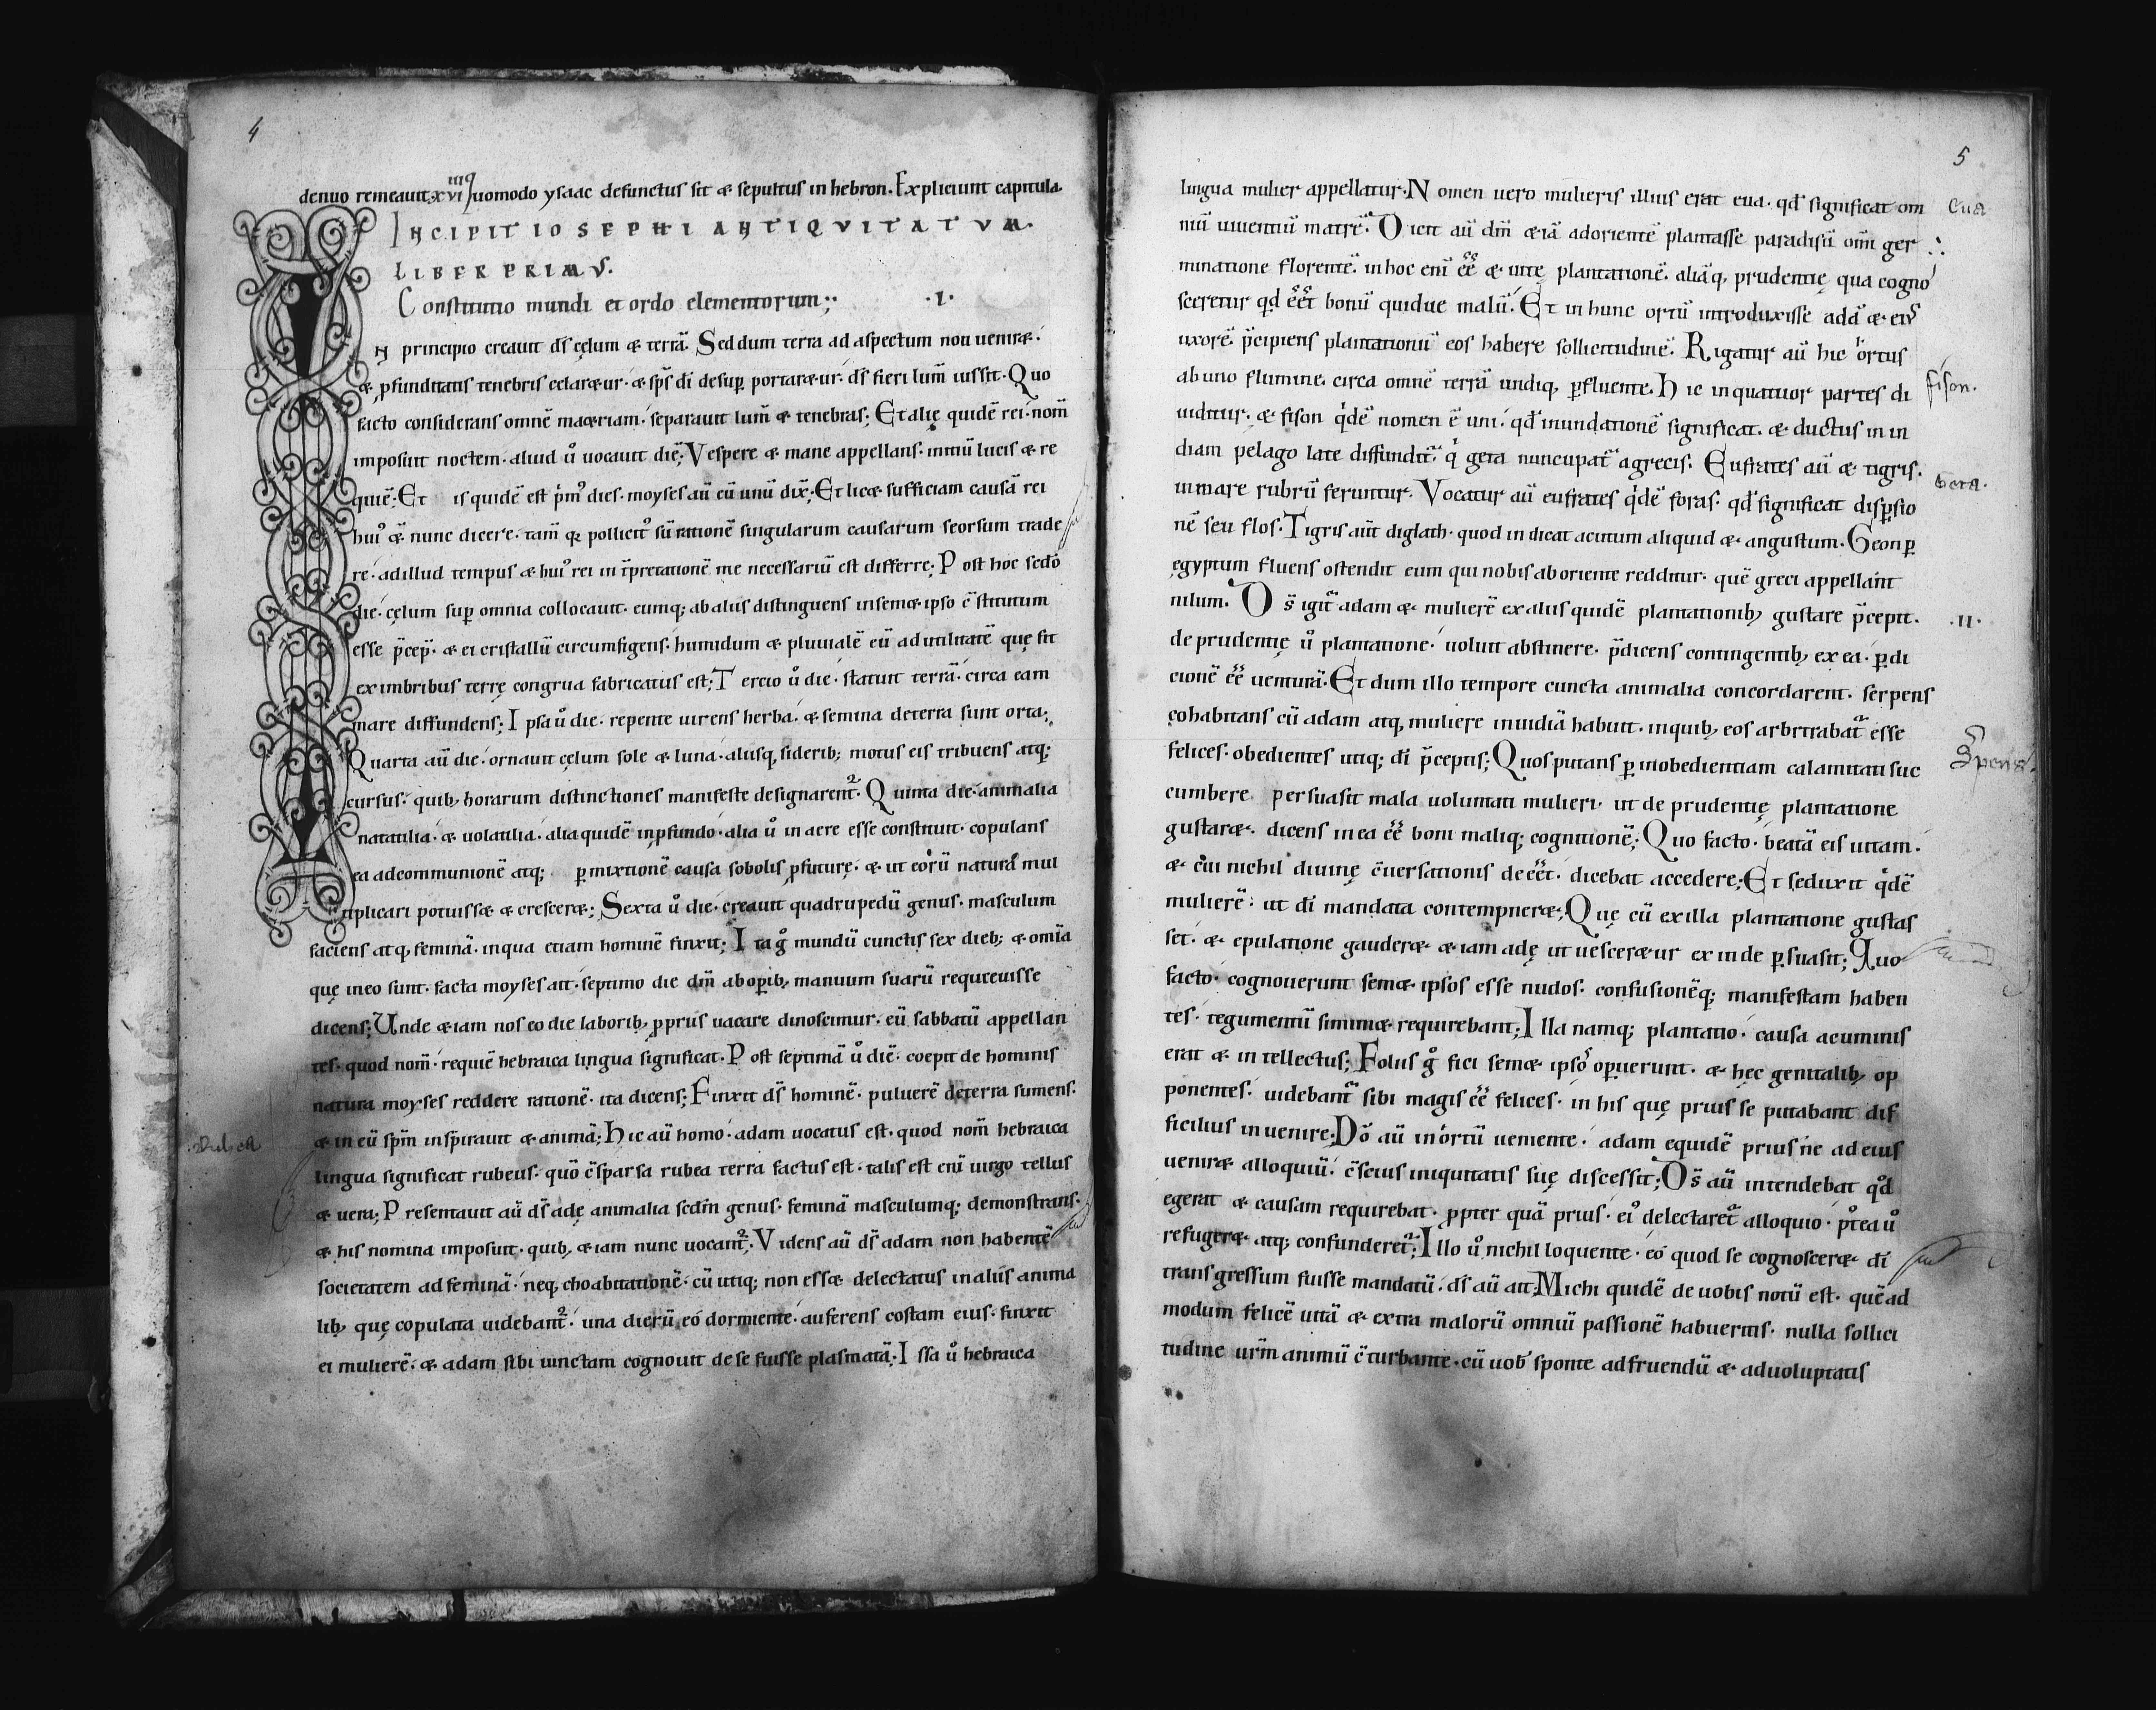 12th-c. copy of the Antiquitates Judaicae by Flavius Josephus from Kloster Einsiedeln (HMML 48573)